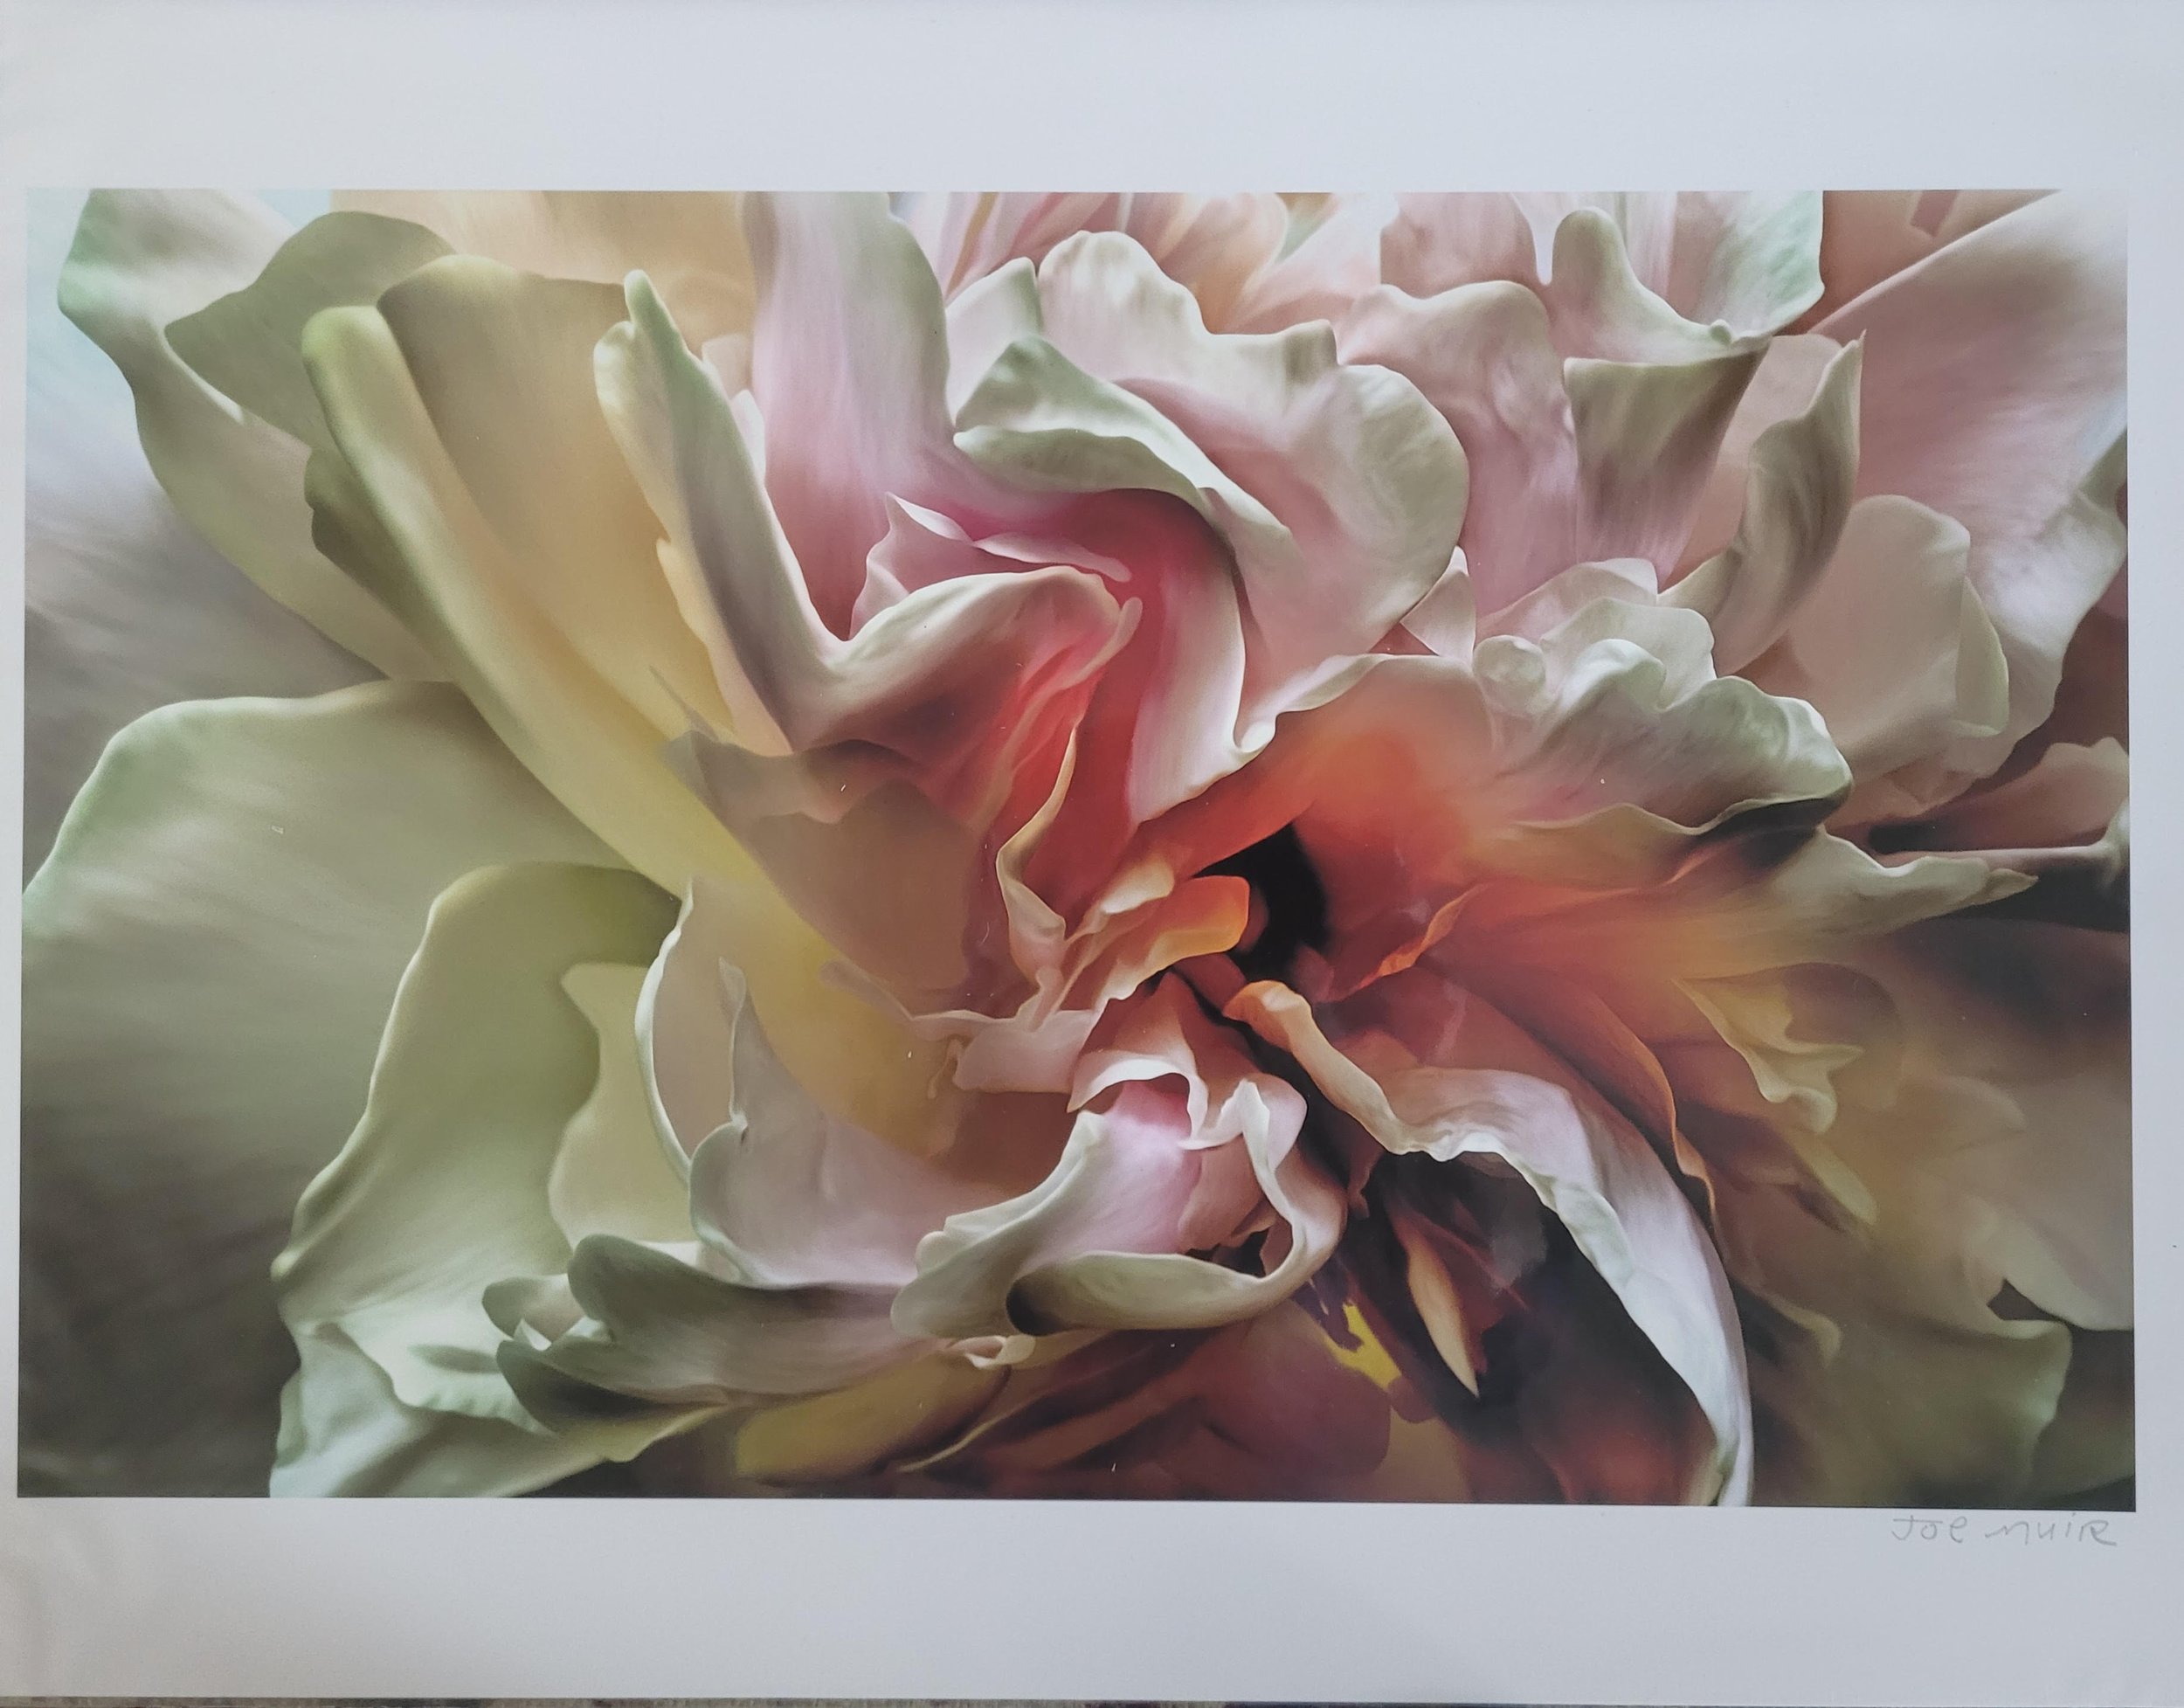  Joe Muir,  # 1,  From the Flower portfolio, 1/3, 2015-2020, Inkjet prints, 16 x 20 inches, $950. each (framed) 